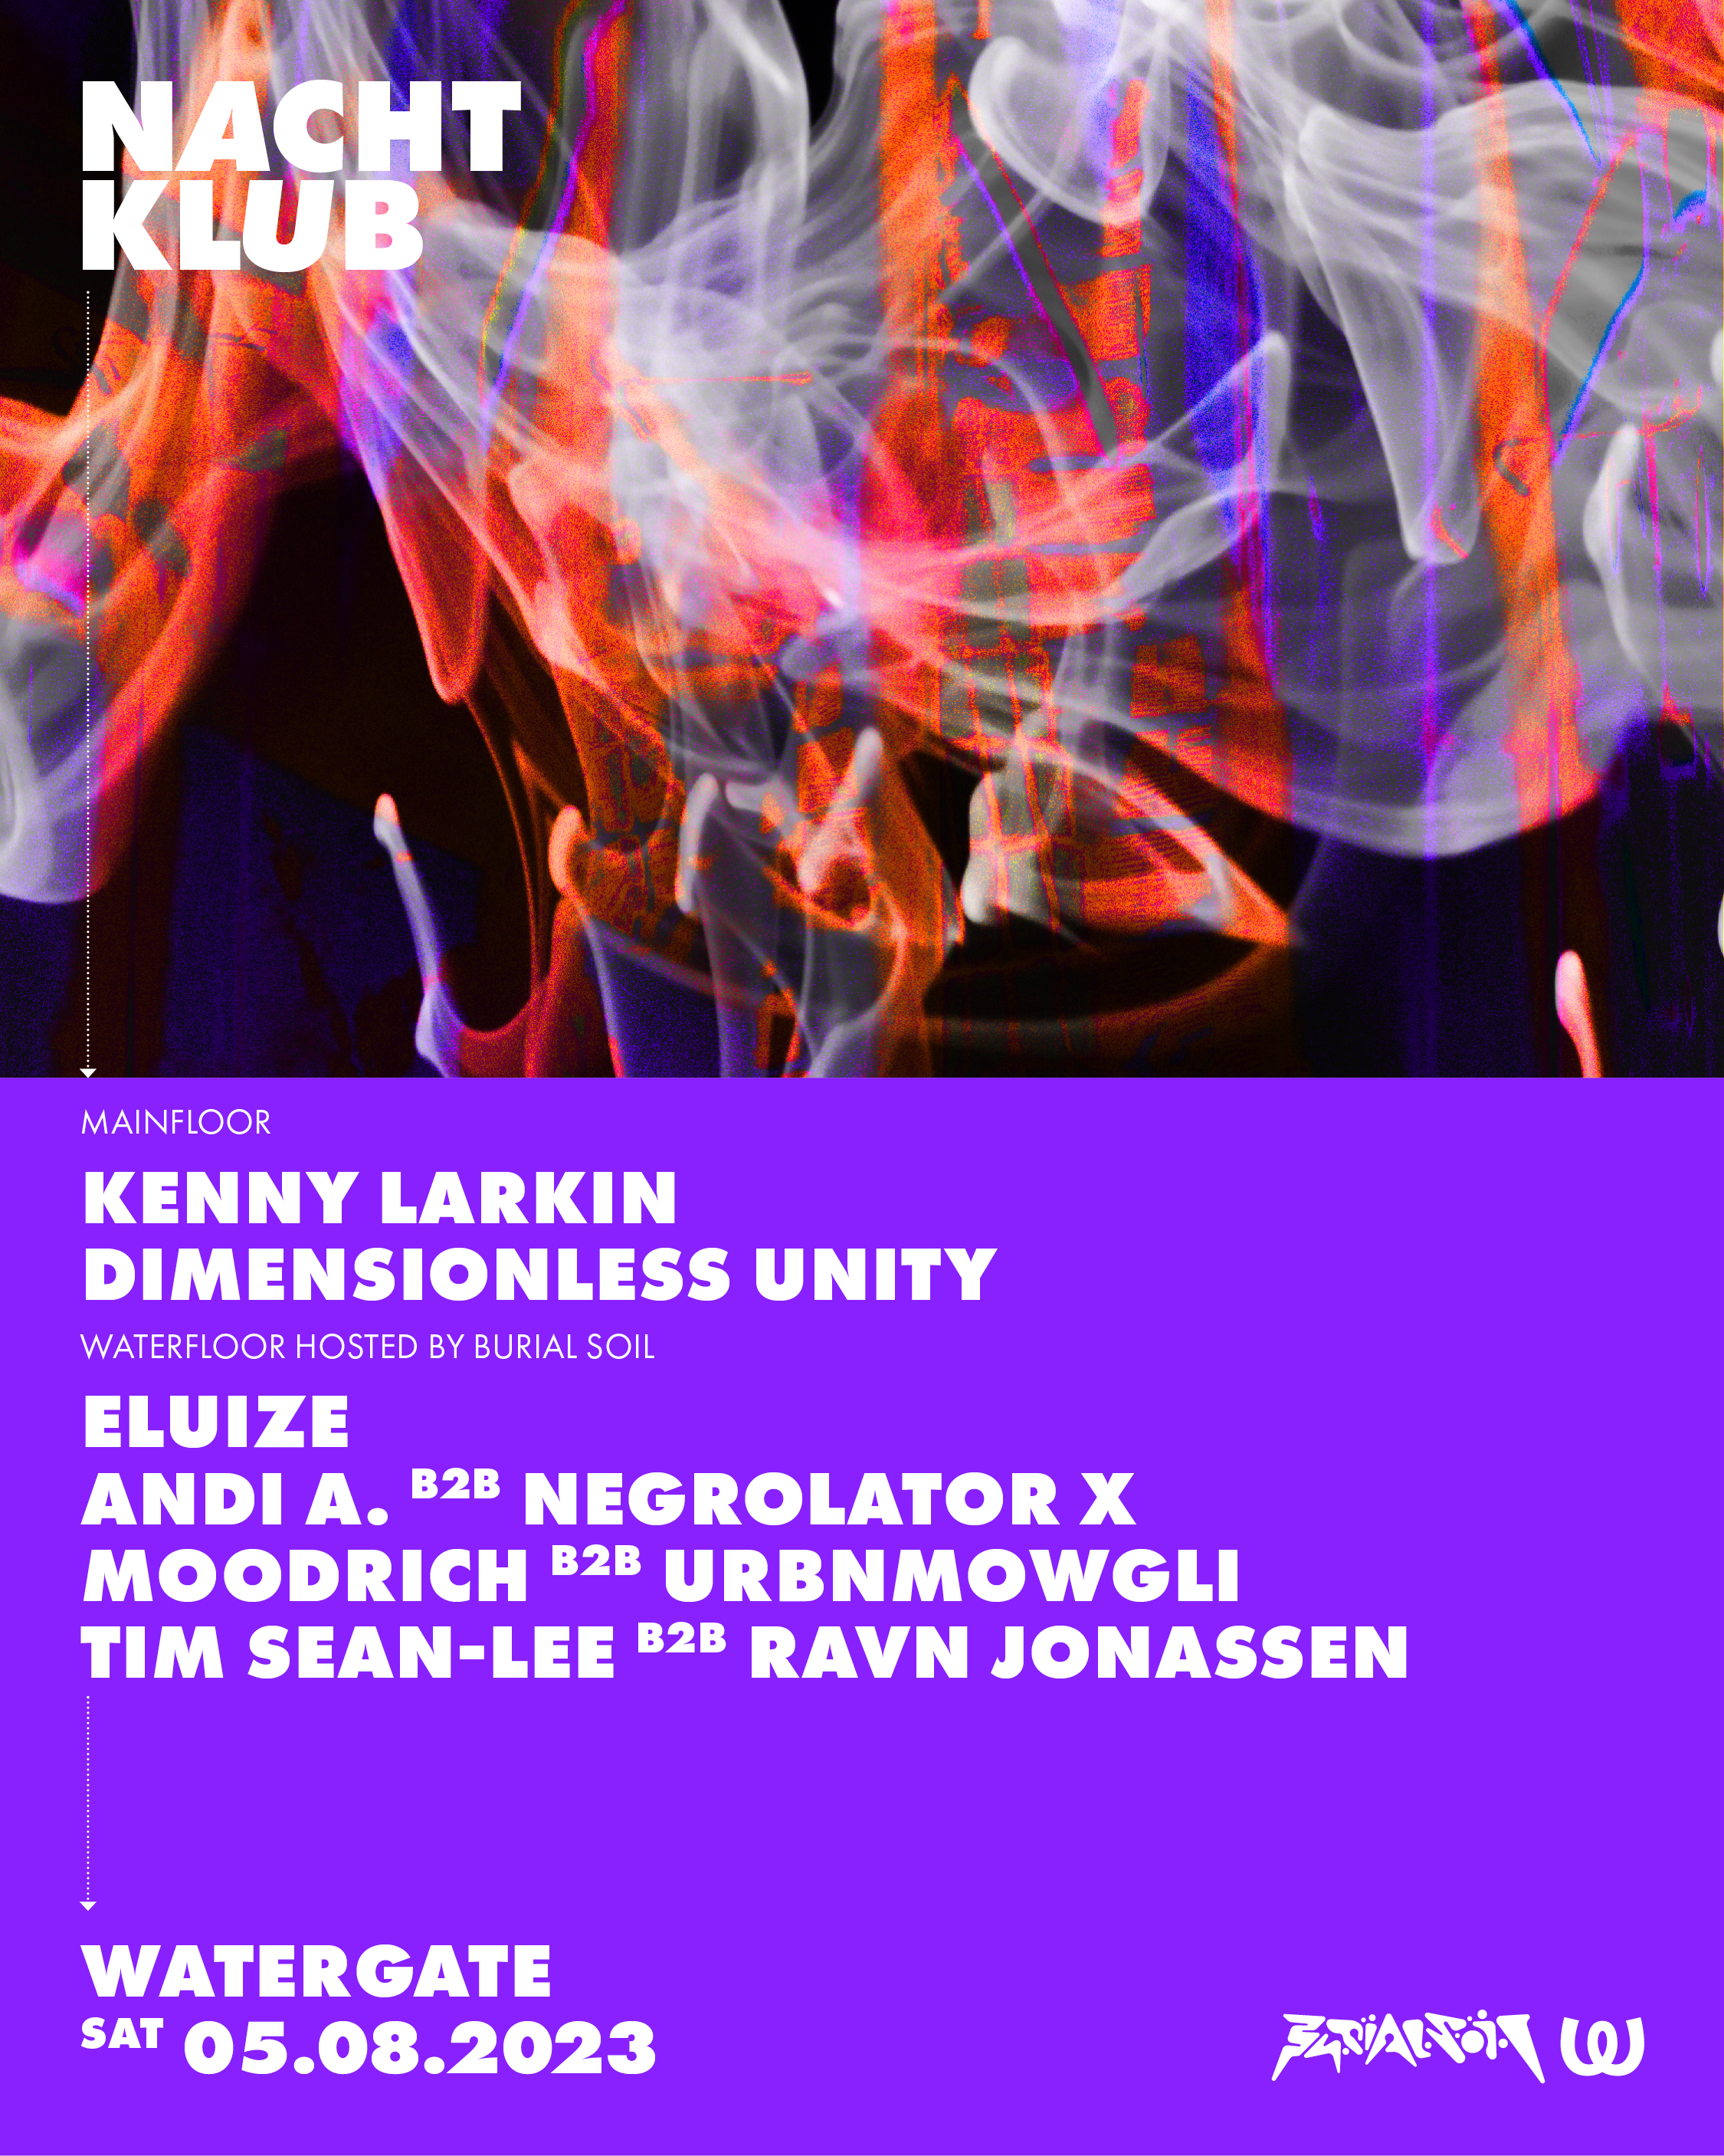 Nachtklub: Kenny Larkin, Dimensionless Unity, Eluize, Burial Soil - フライヤー裏